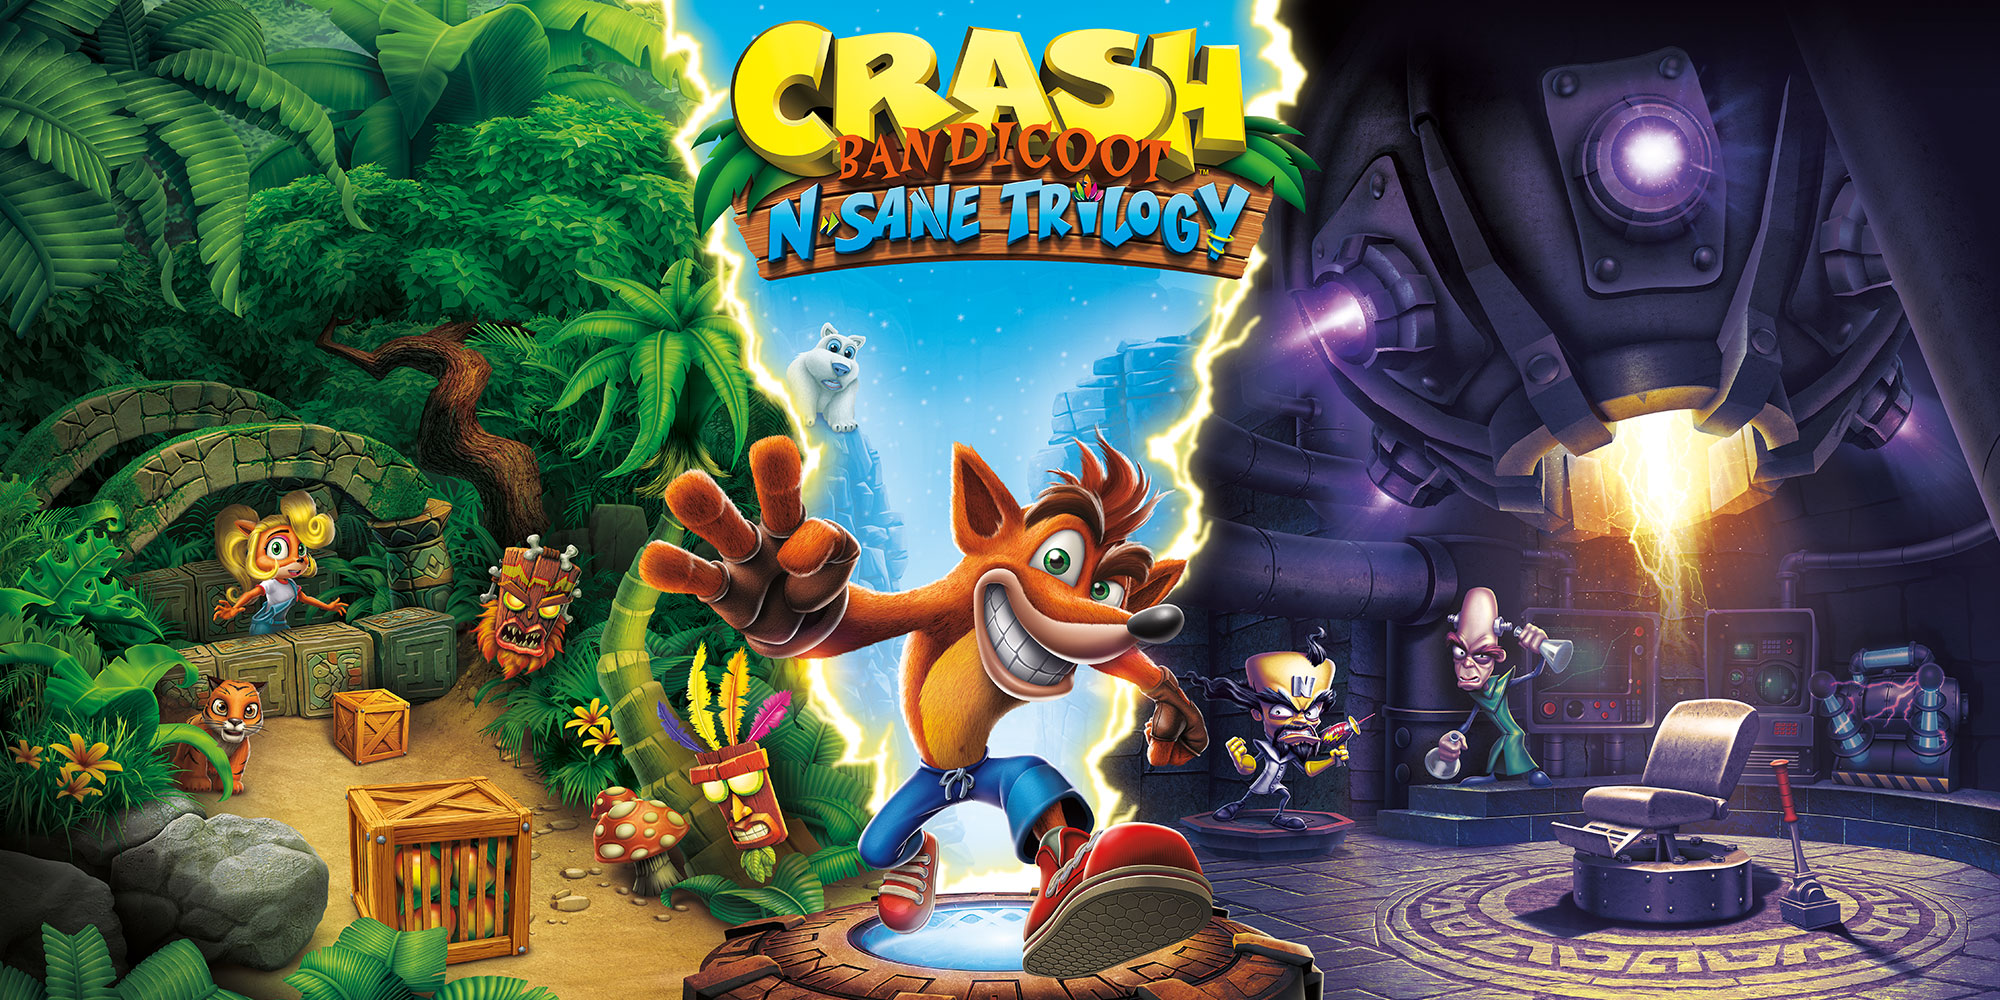 Novo gameplay Crash Bandicoot N. Sane Trilogy mostra jogo eletrizante